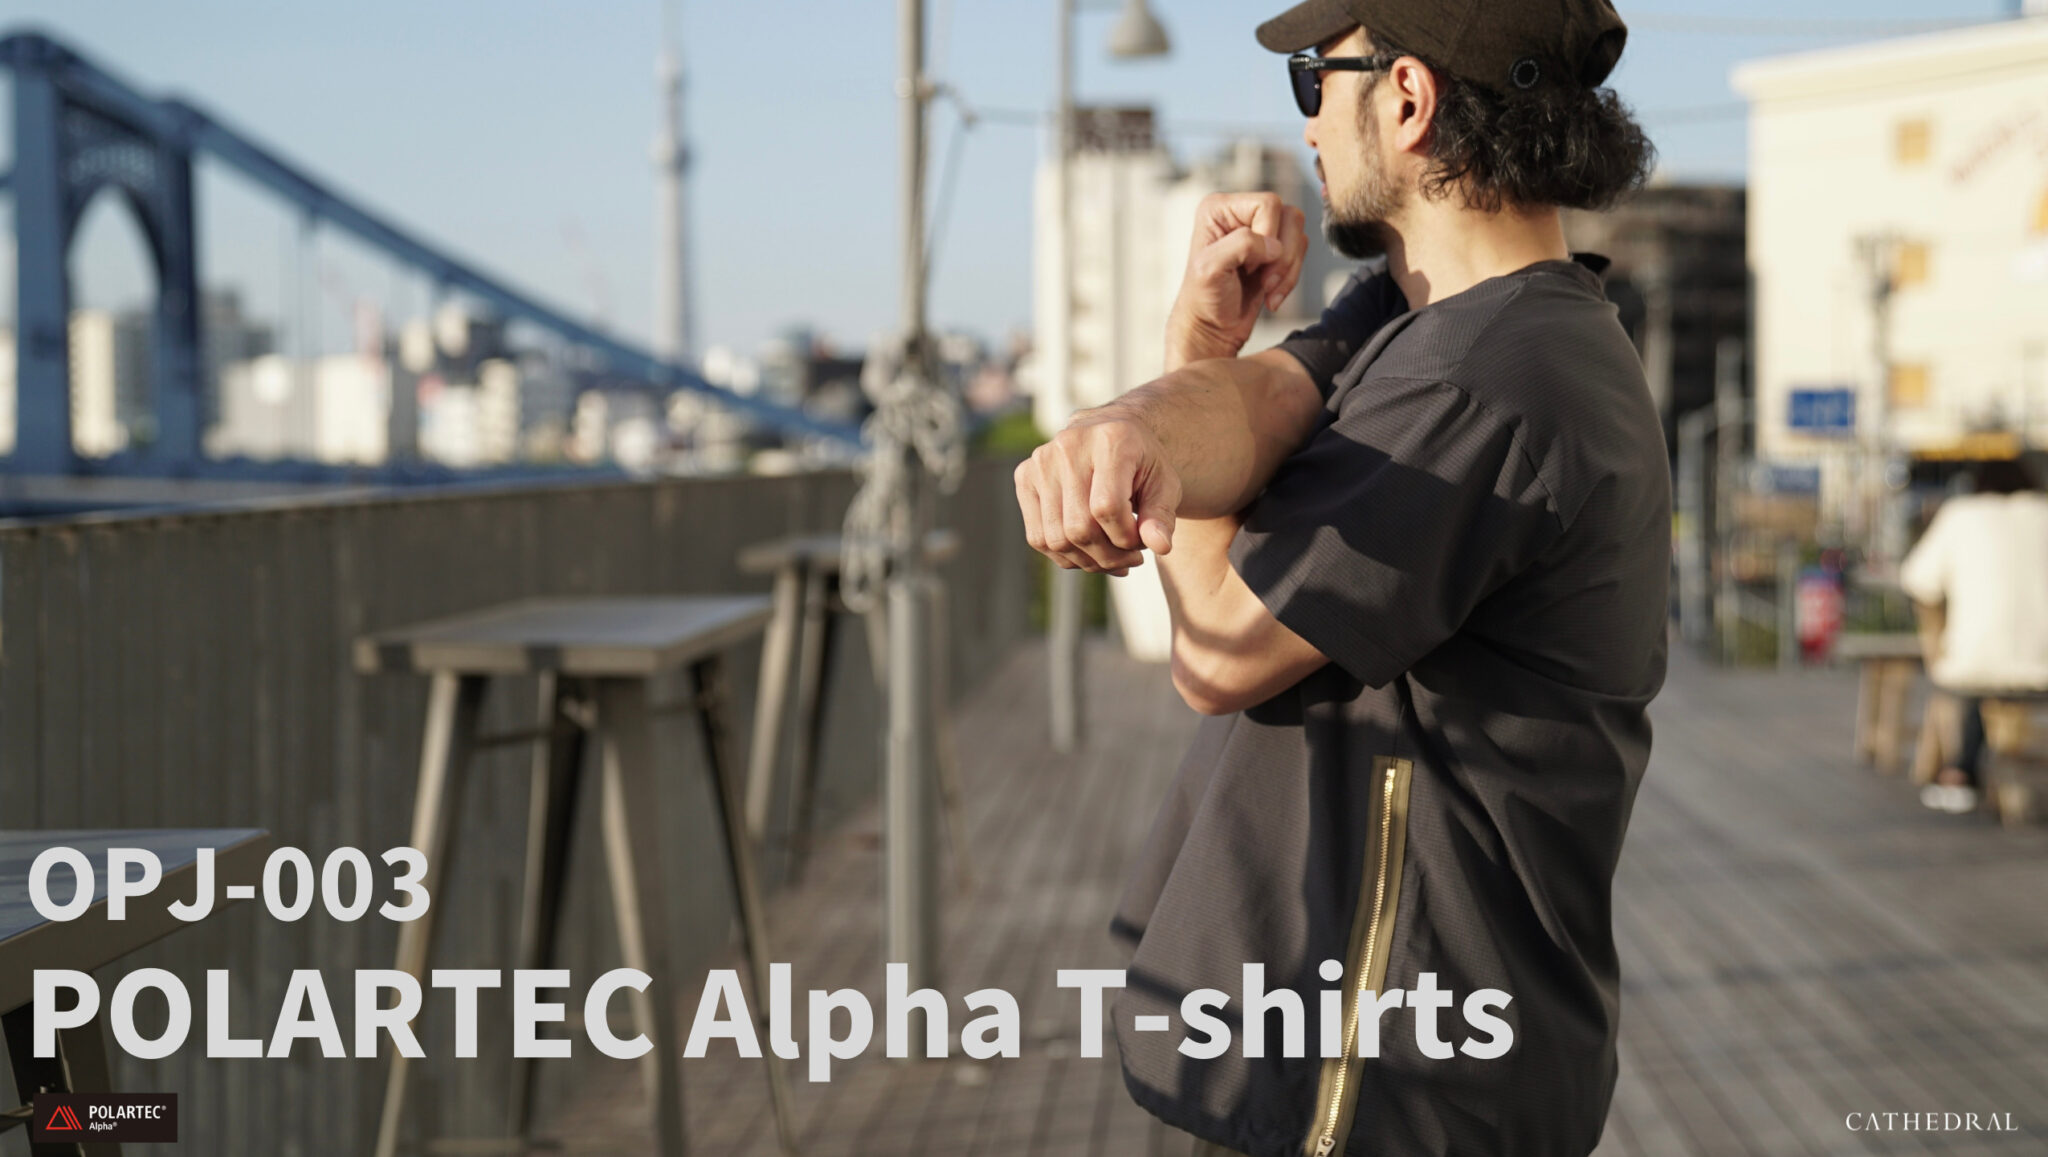 OPUS JAPAN “POLARTEC Alpha T-shirts